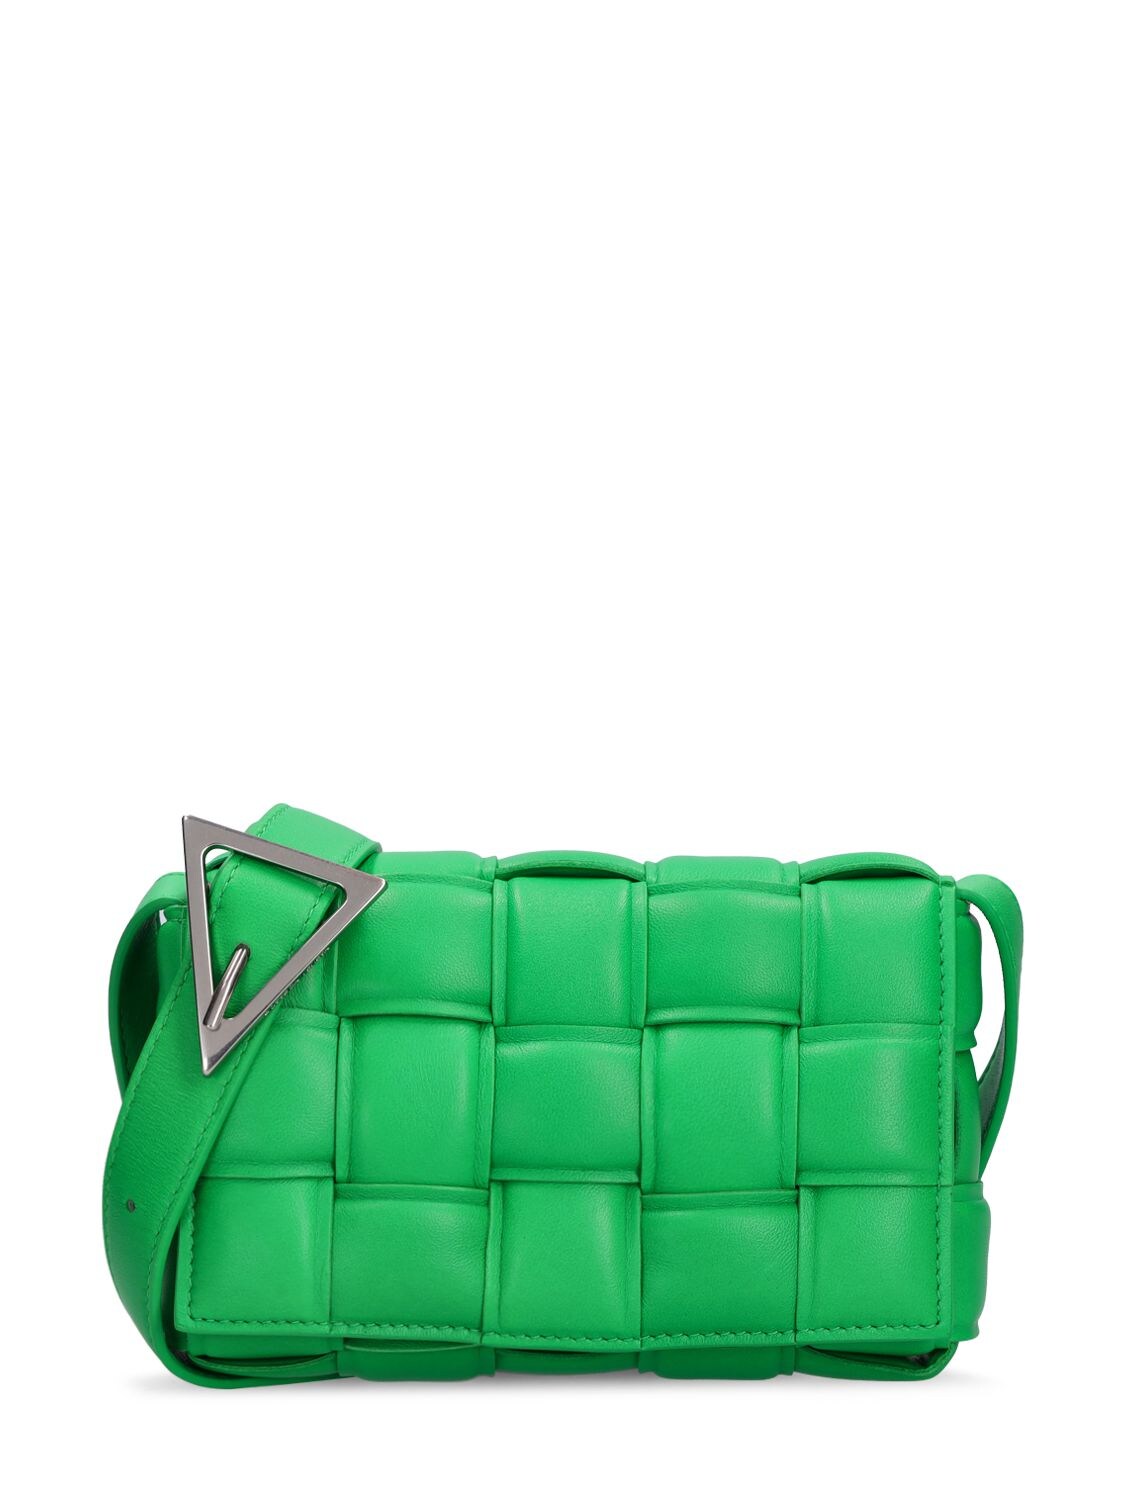 Bottega Veneta - Leather shoulder bag - Parakeet | Luisaviaroma